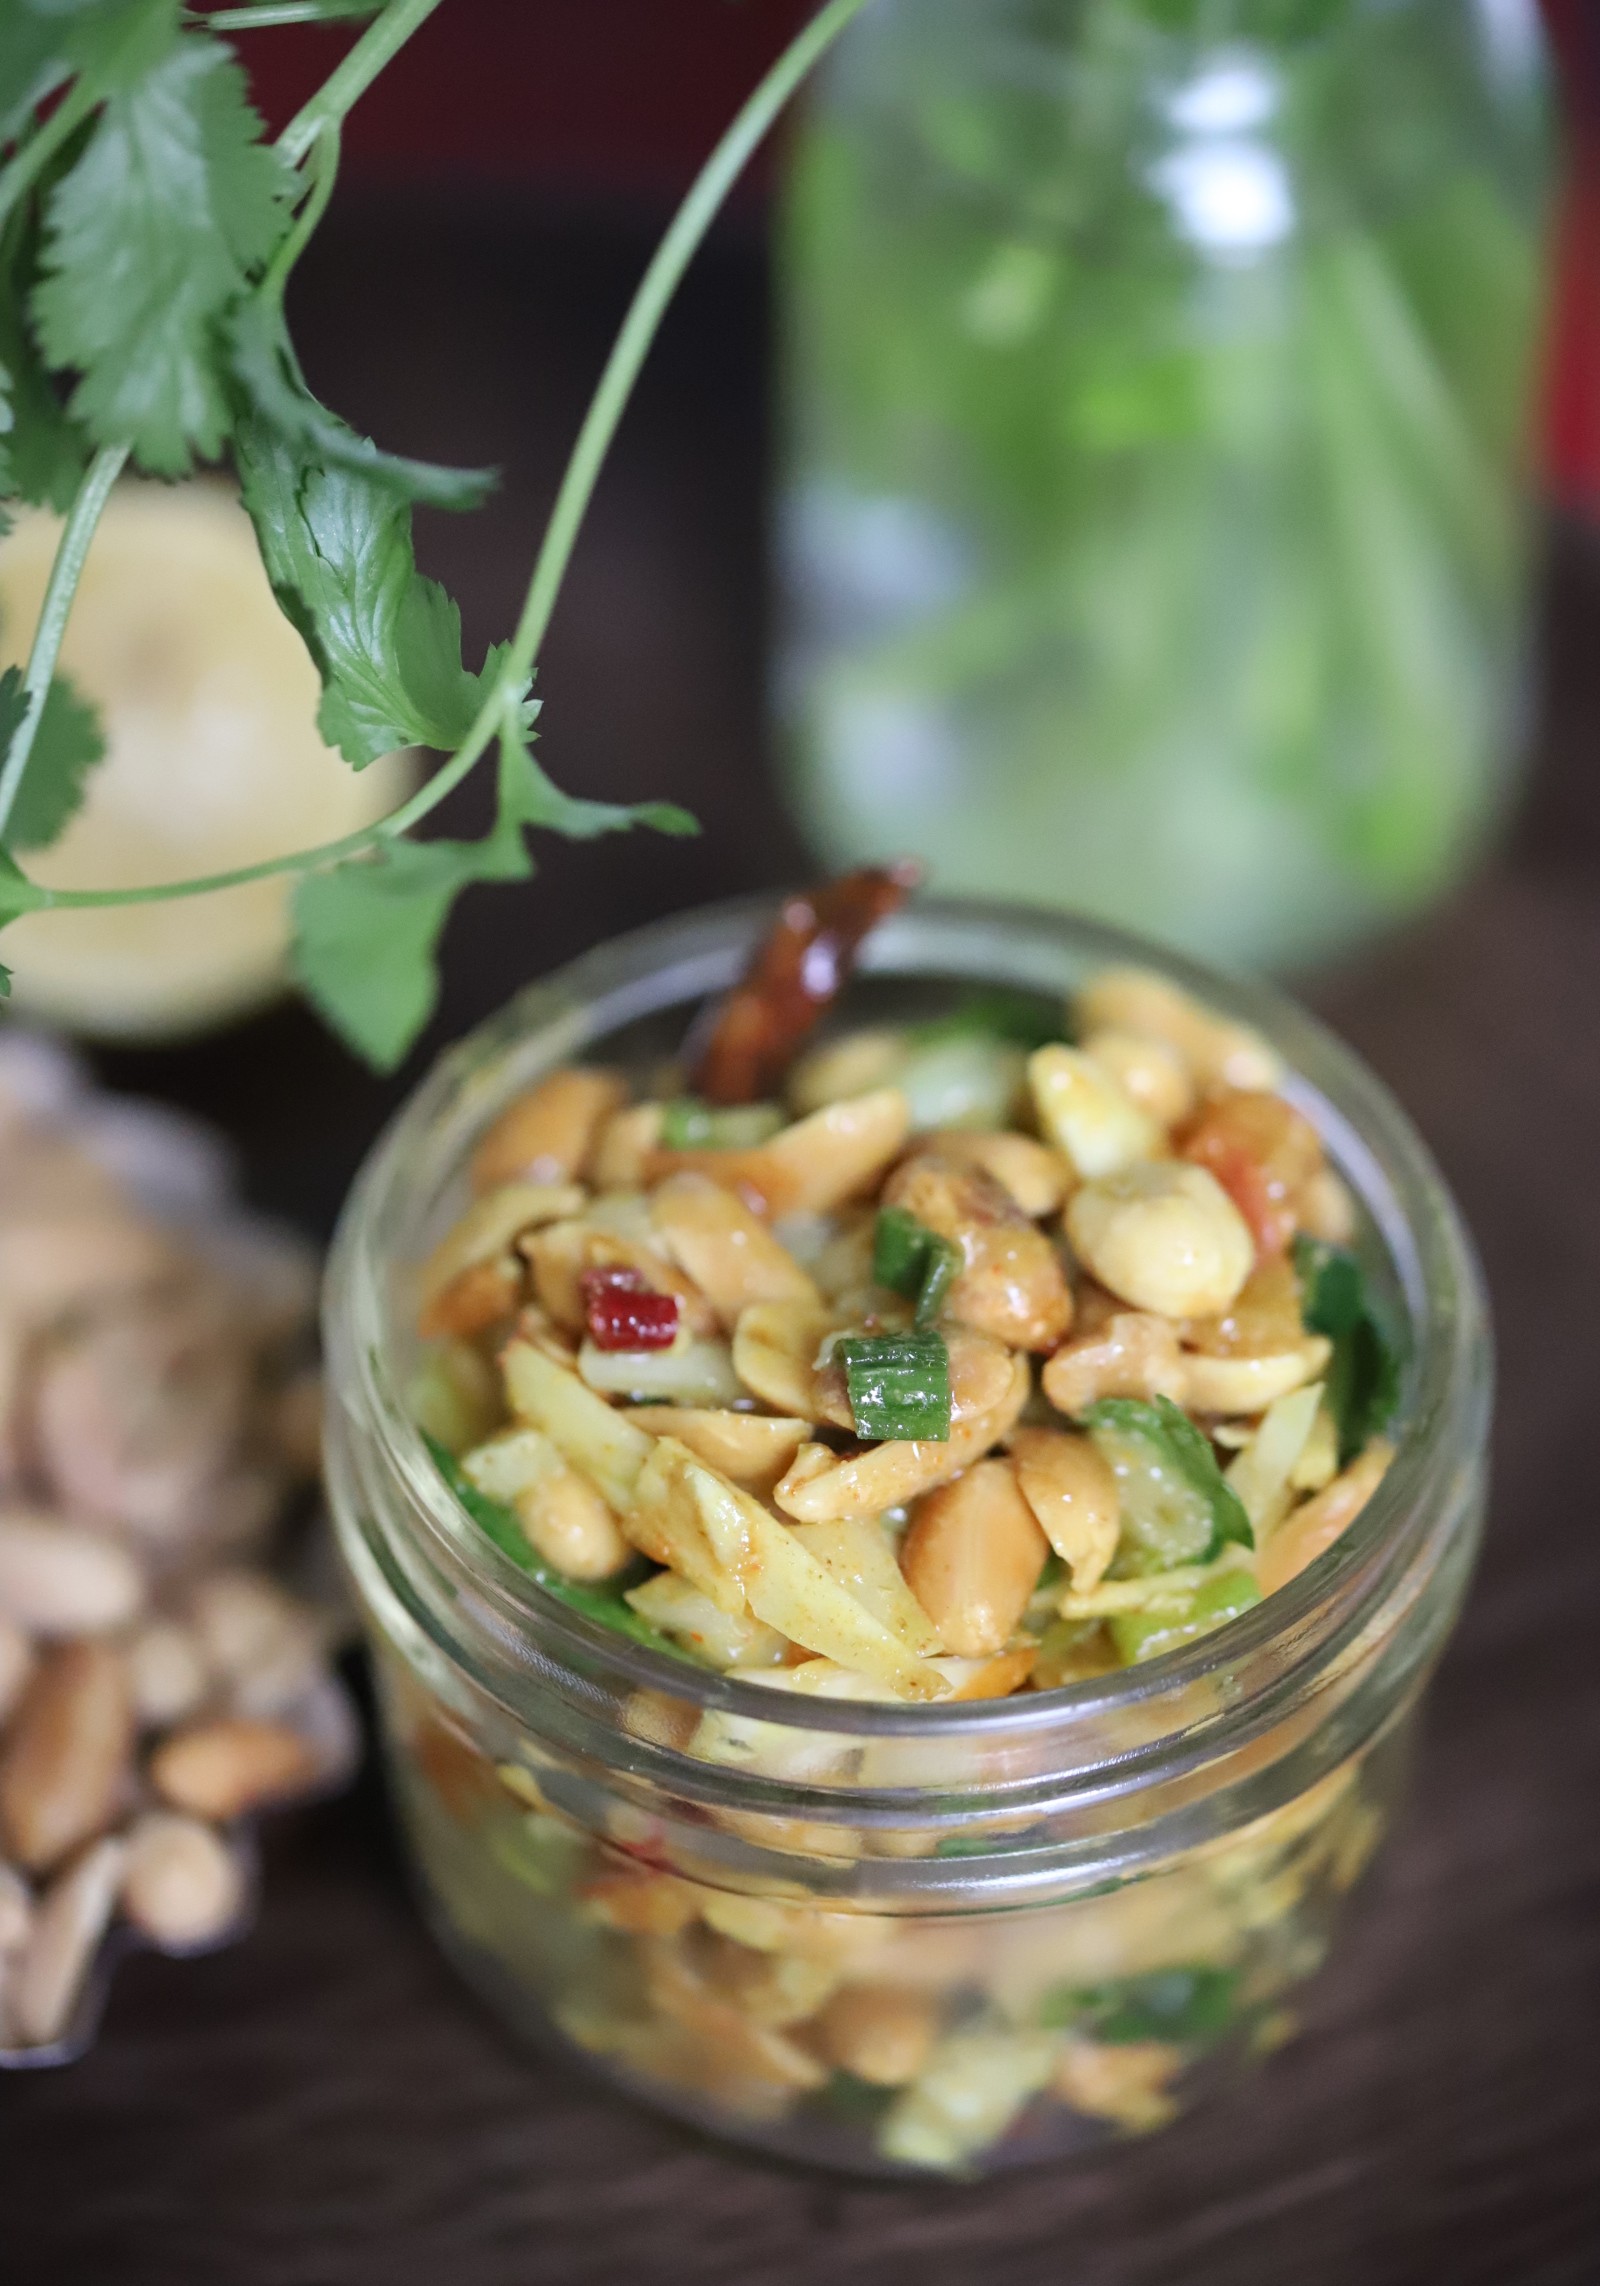 Nepali-Style Peanut Salad (Badam Sadheko)